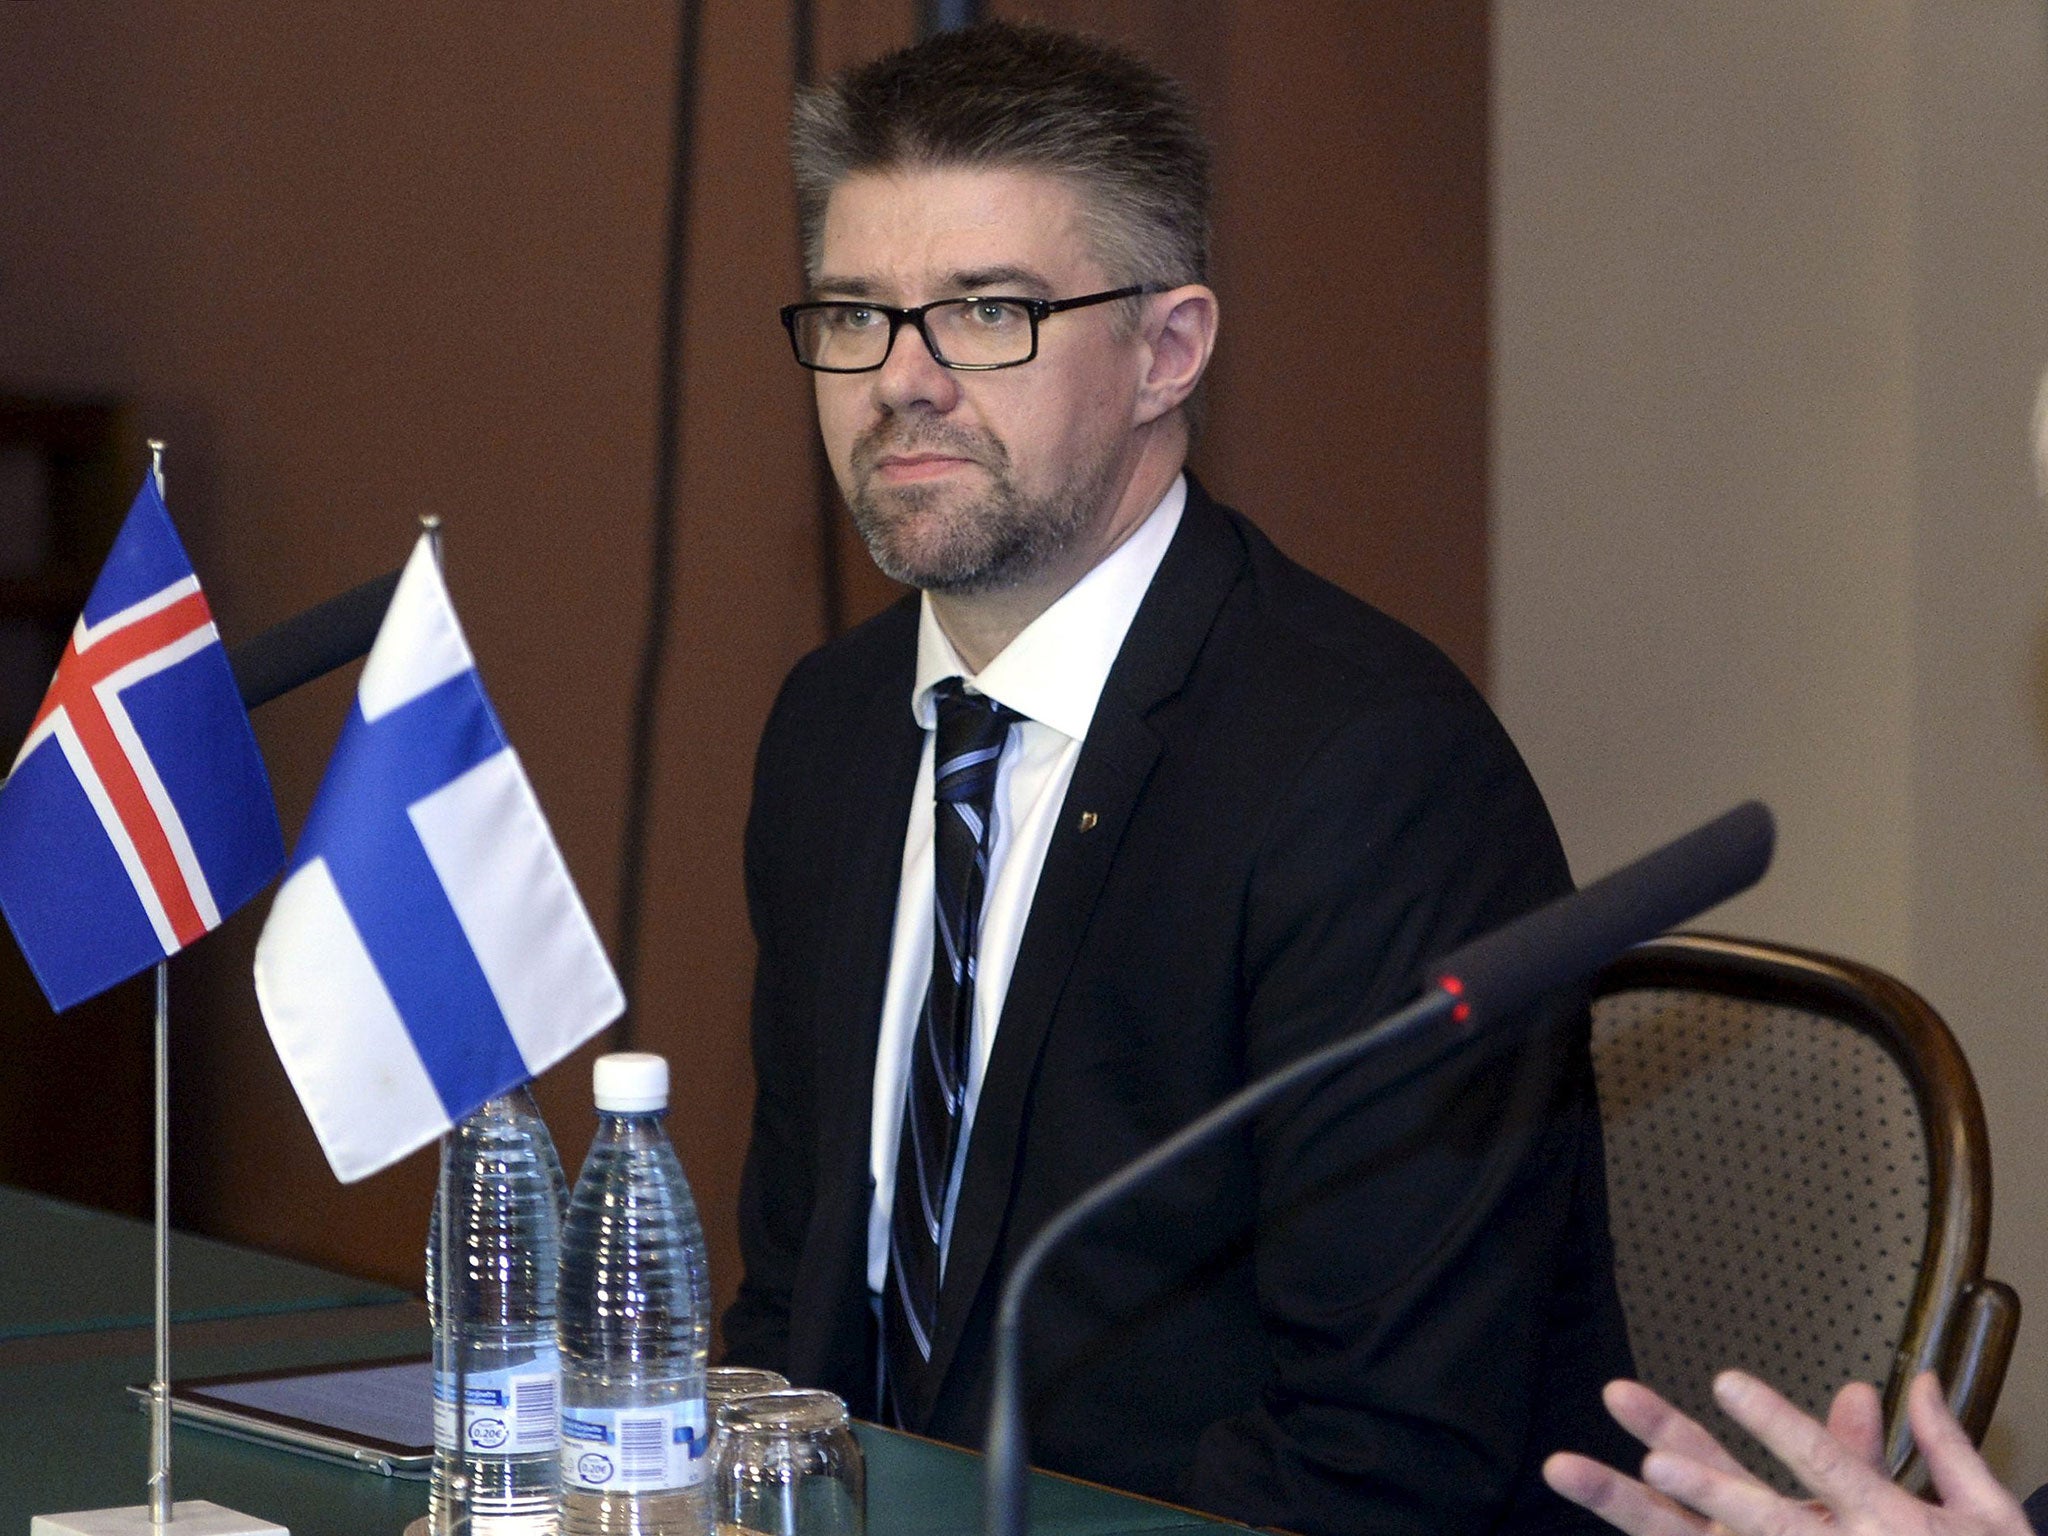 Iceland’s Foreign Minister Gunnar Bragi Sveinsson